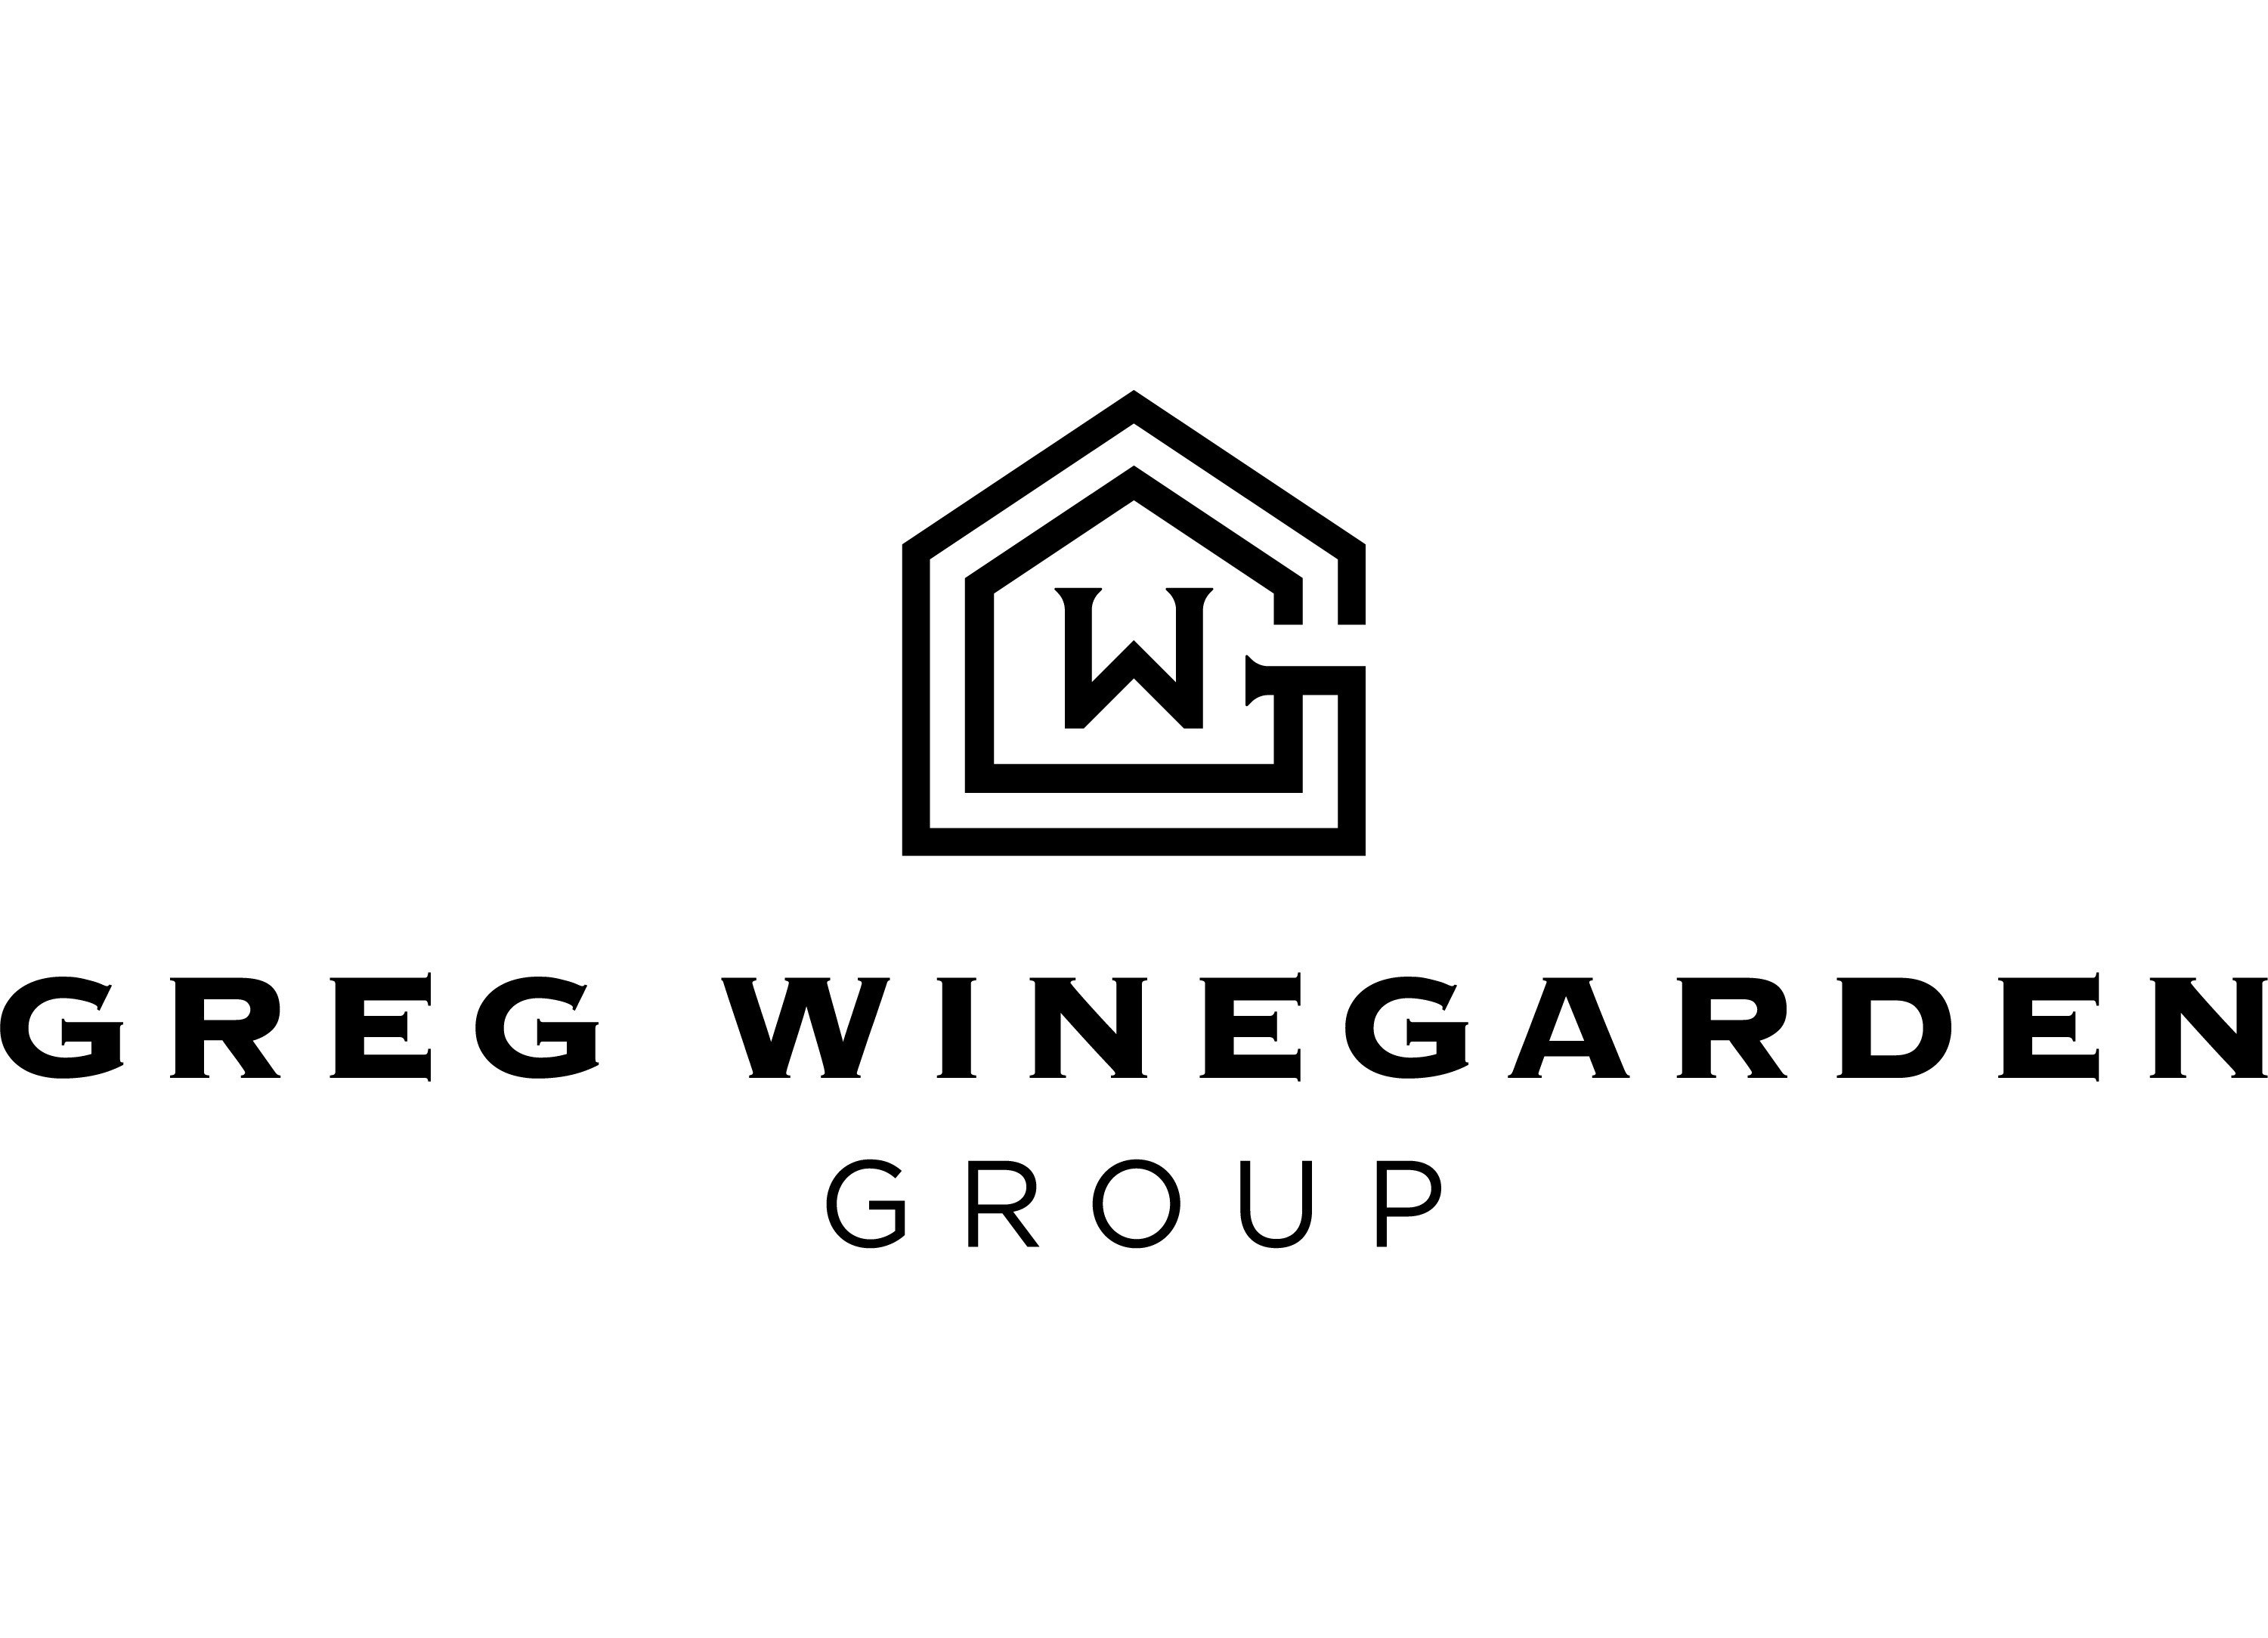 Greg Winegarden Group